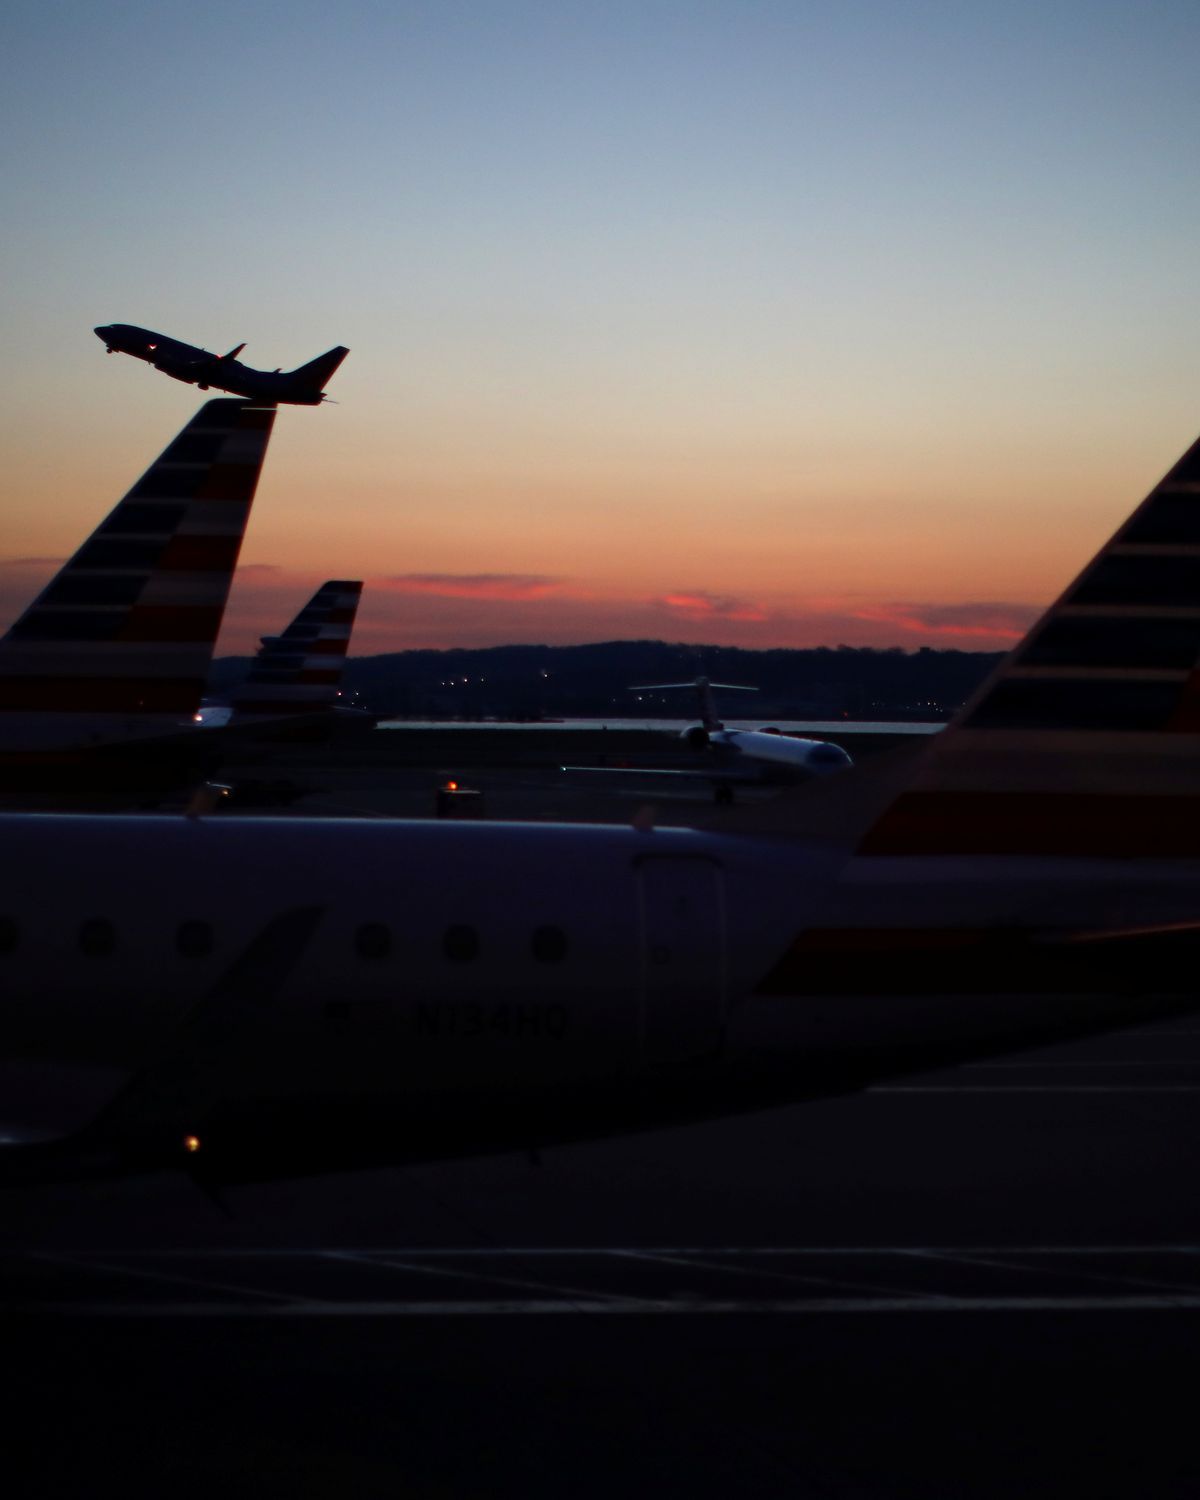 U.S. airlines warn 5G wireless could wreak havoc with flights